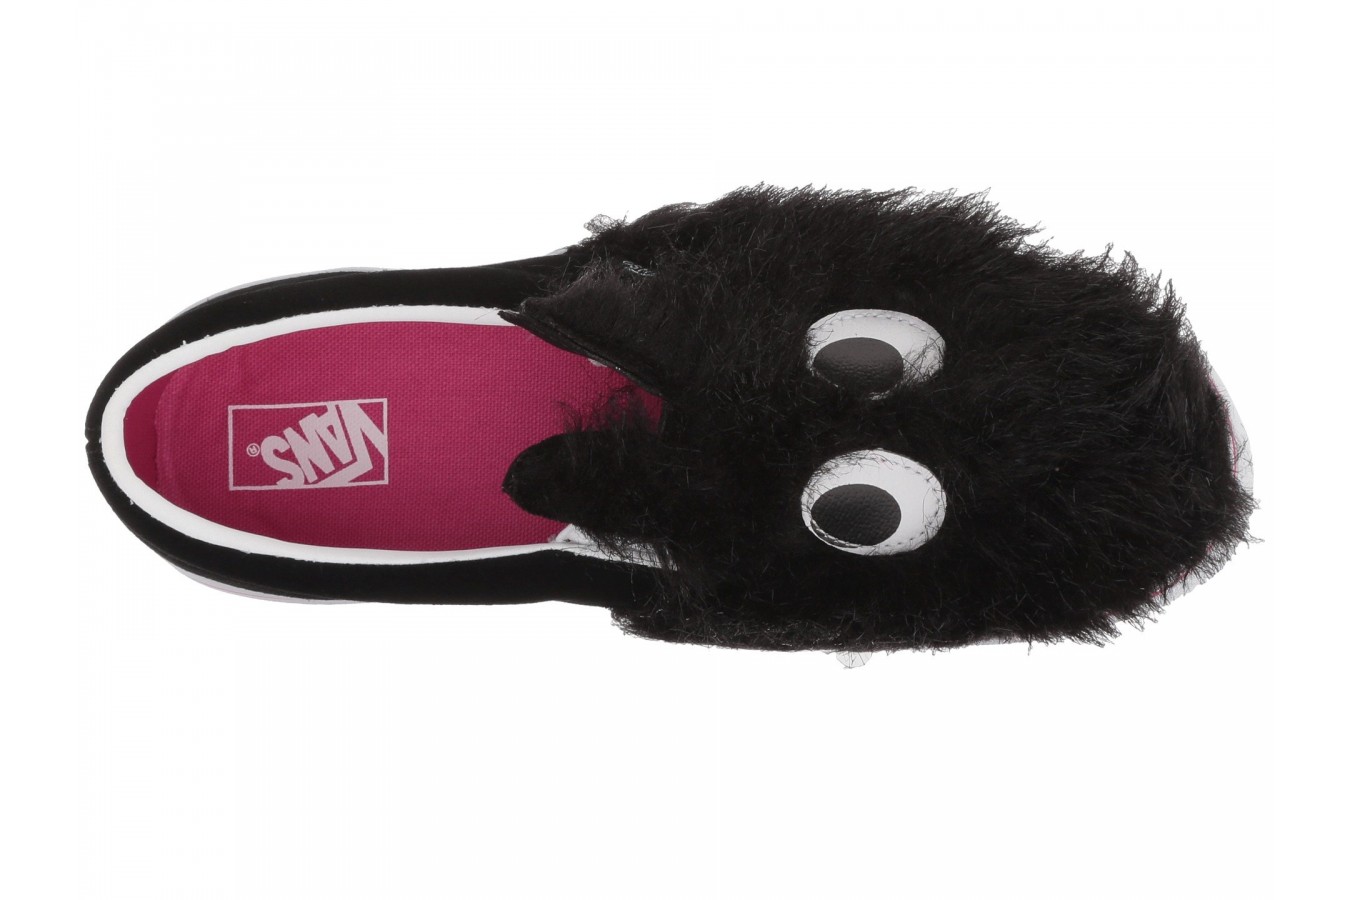 Vans Slip On Friend Party Fur Black Skate Shoes Size 10.5 Kids - image 2 of 3